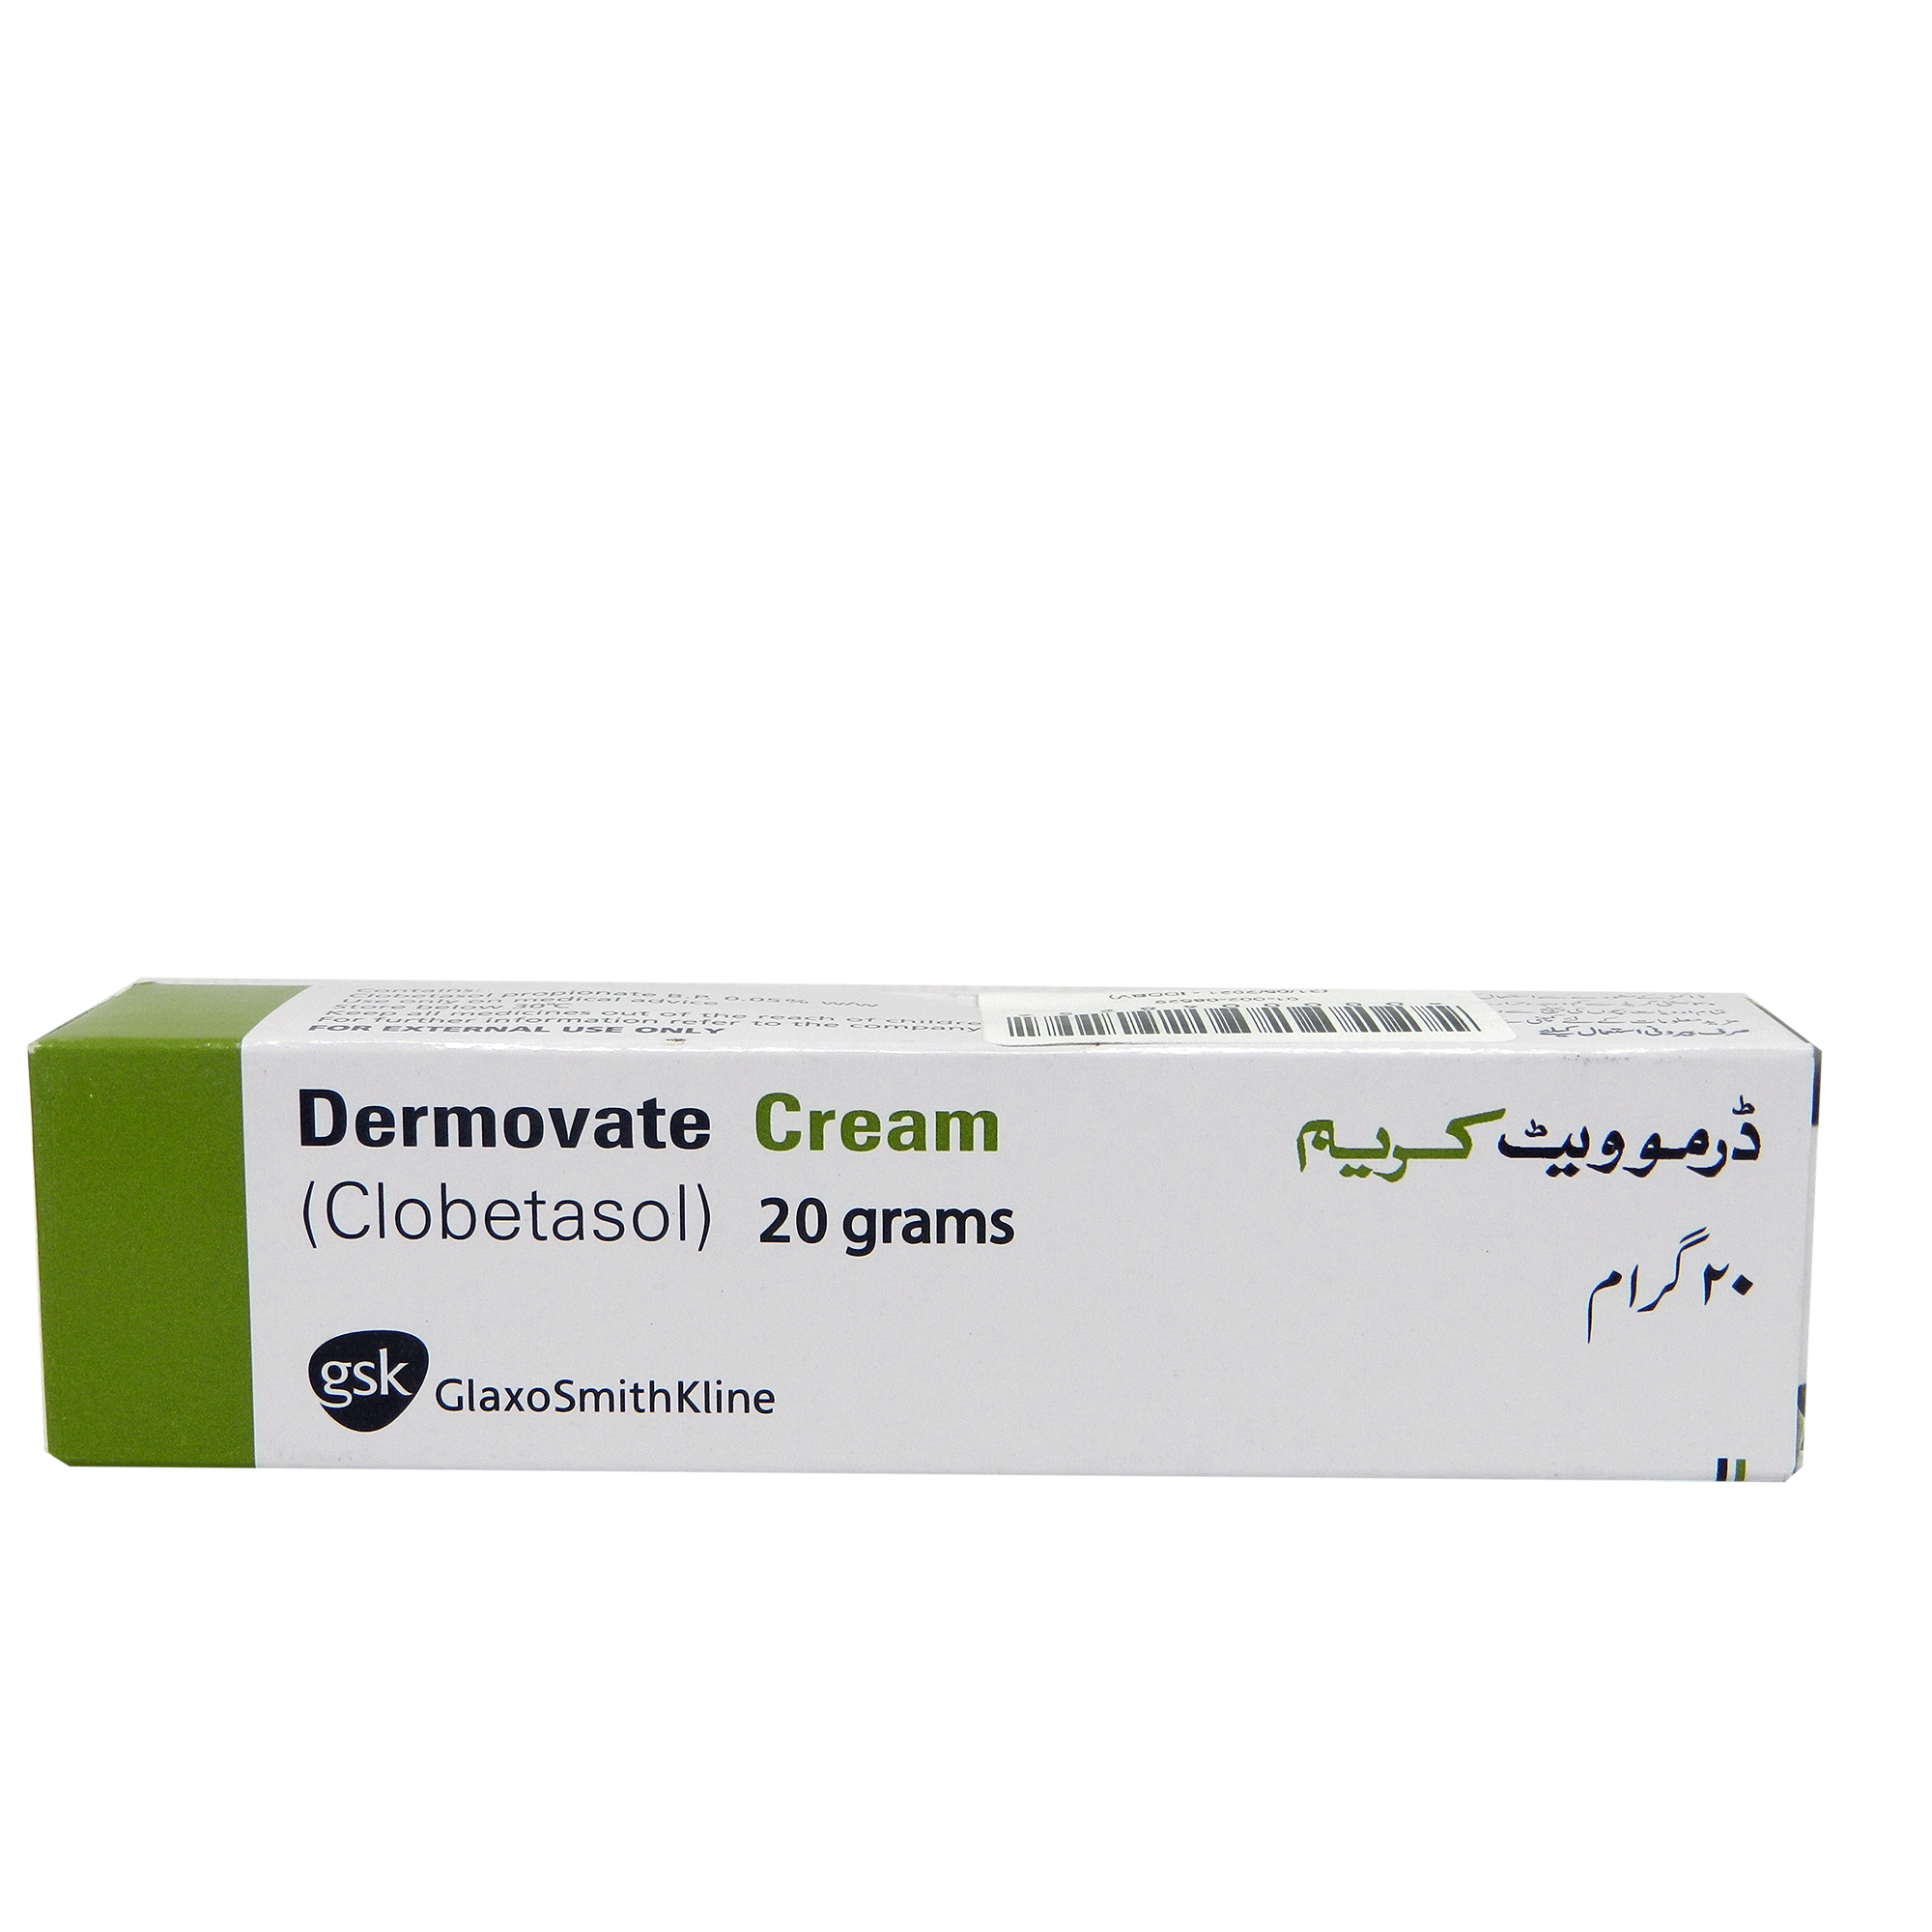 Dermovate Cream 20g Made In Pakistan